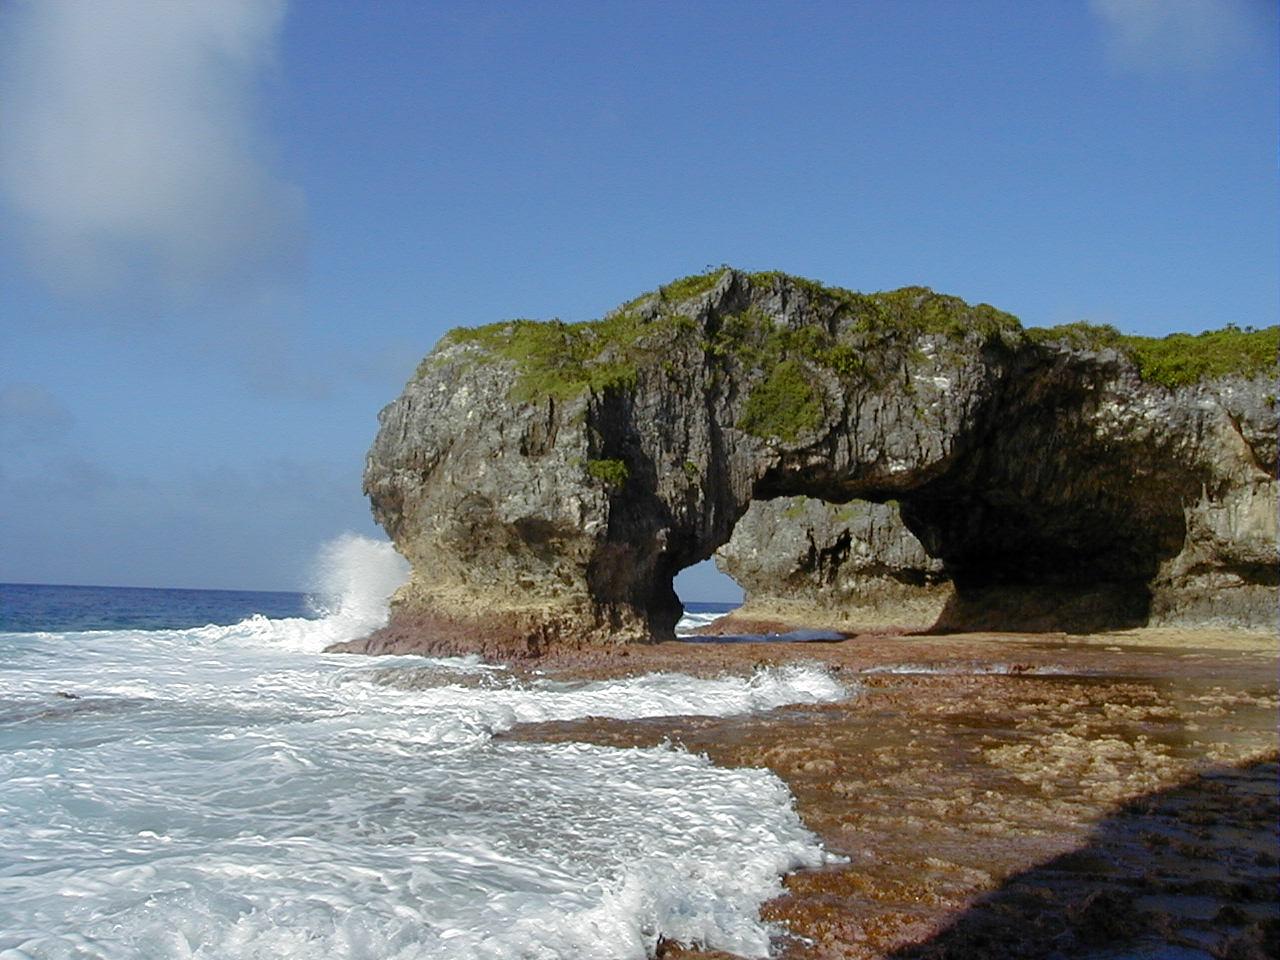 Fotky: Tonga (foto, obrazky)